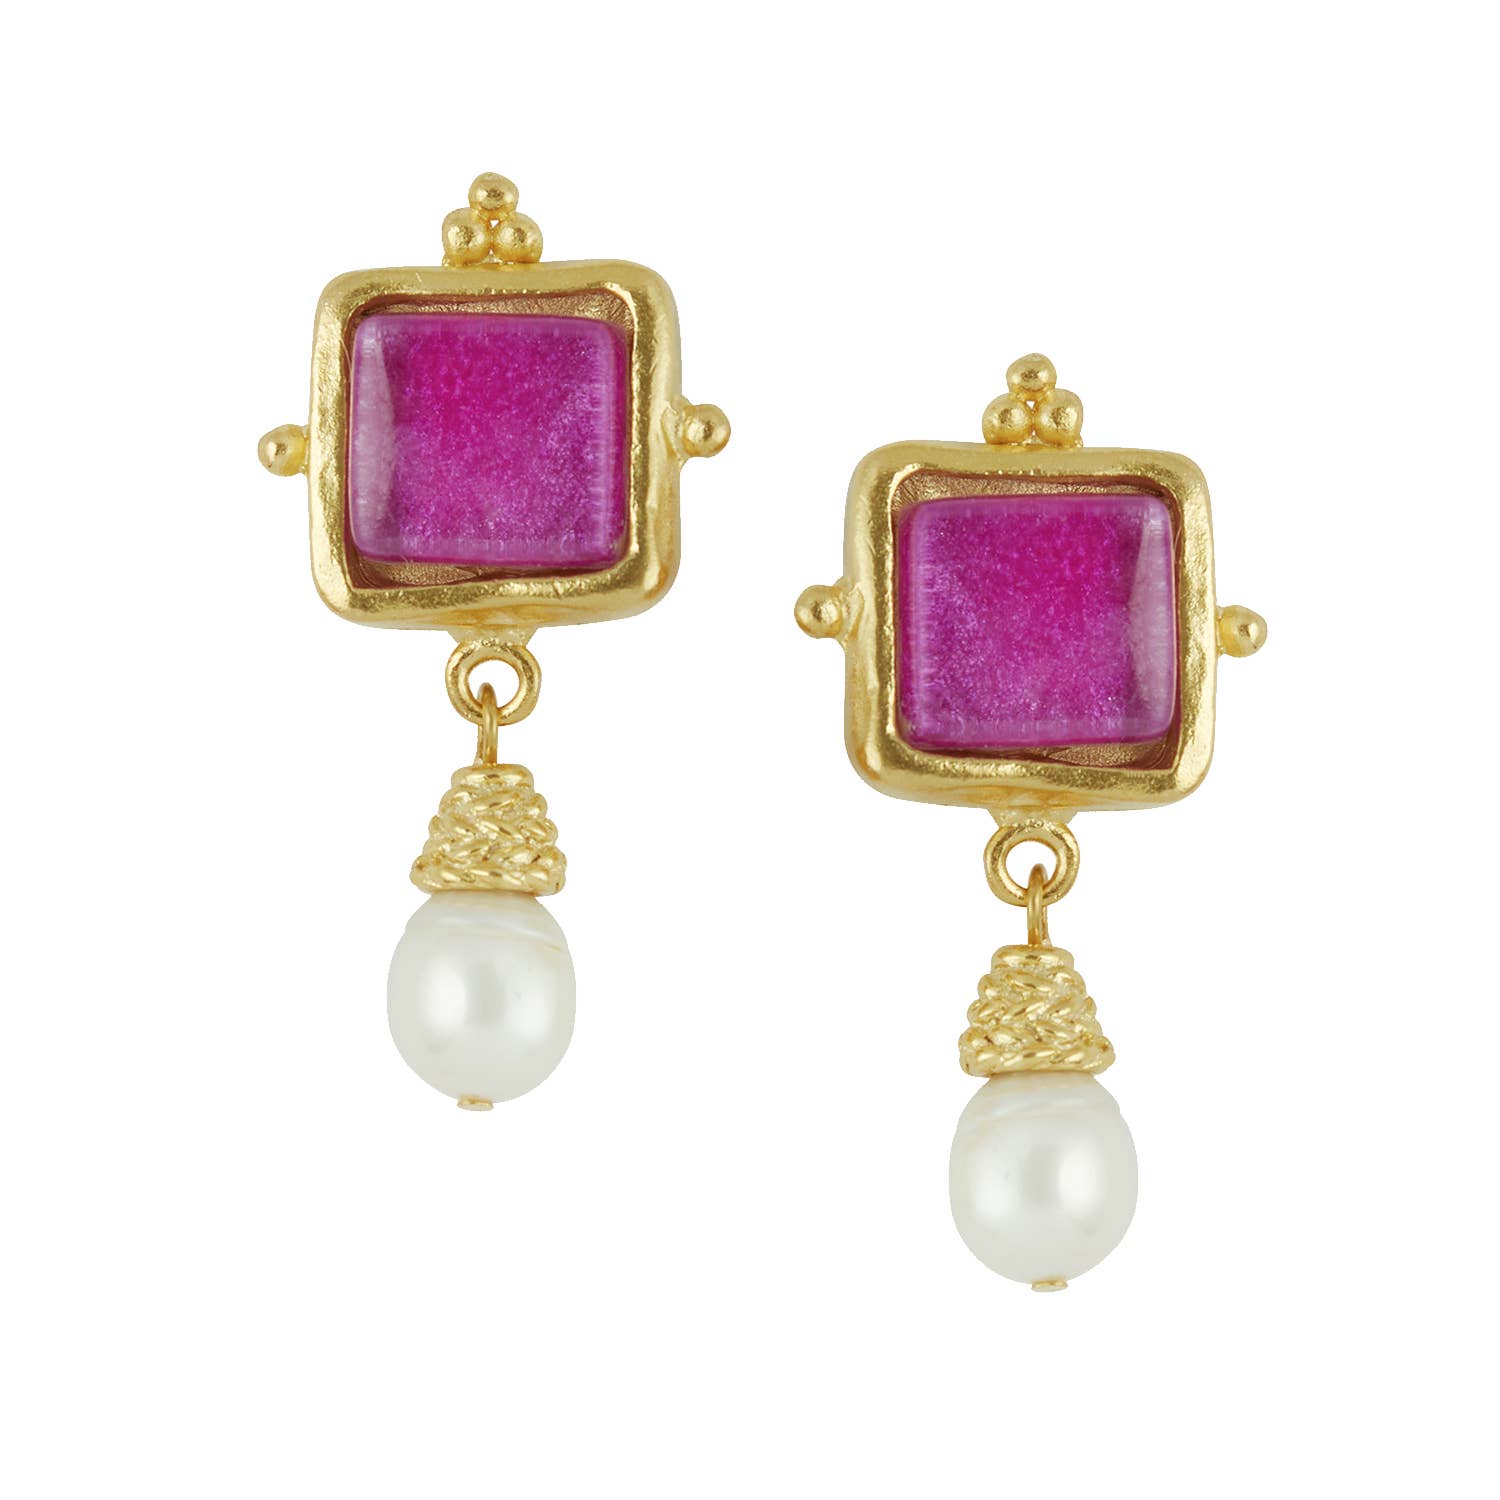 Gold/Fuchsia Glass + Pearl Earrings